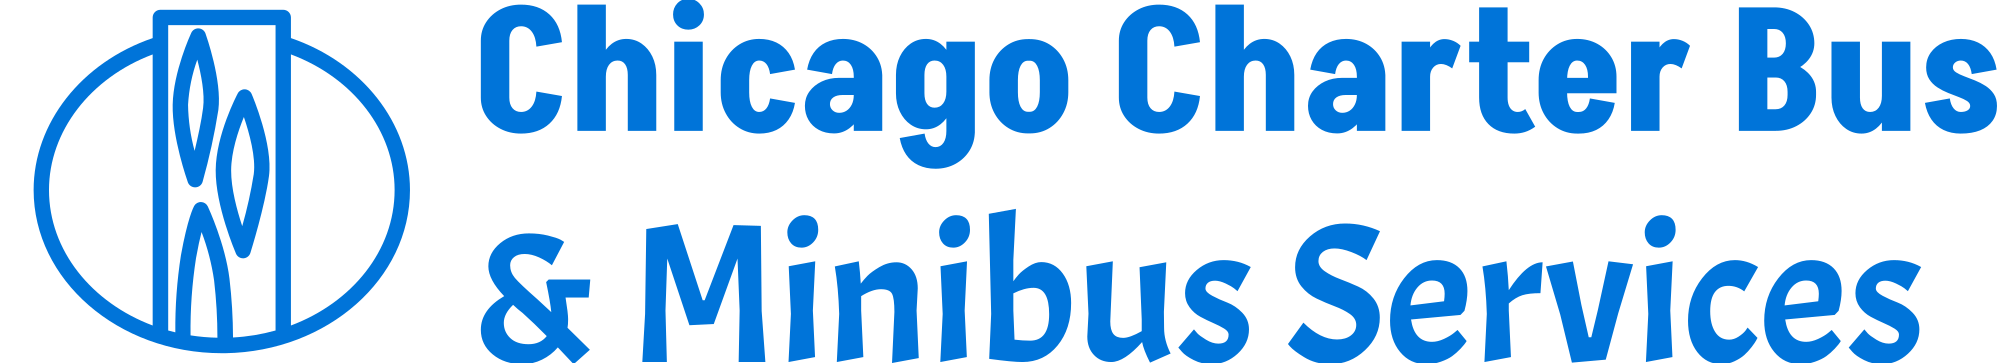 Charter Bus Company Chicago logo